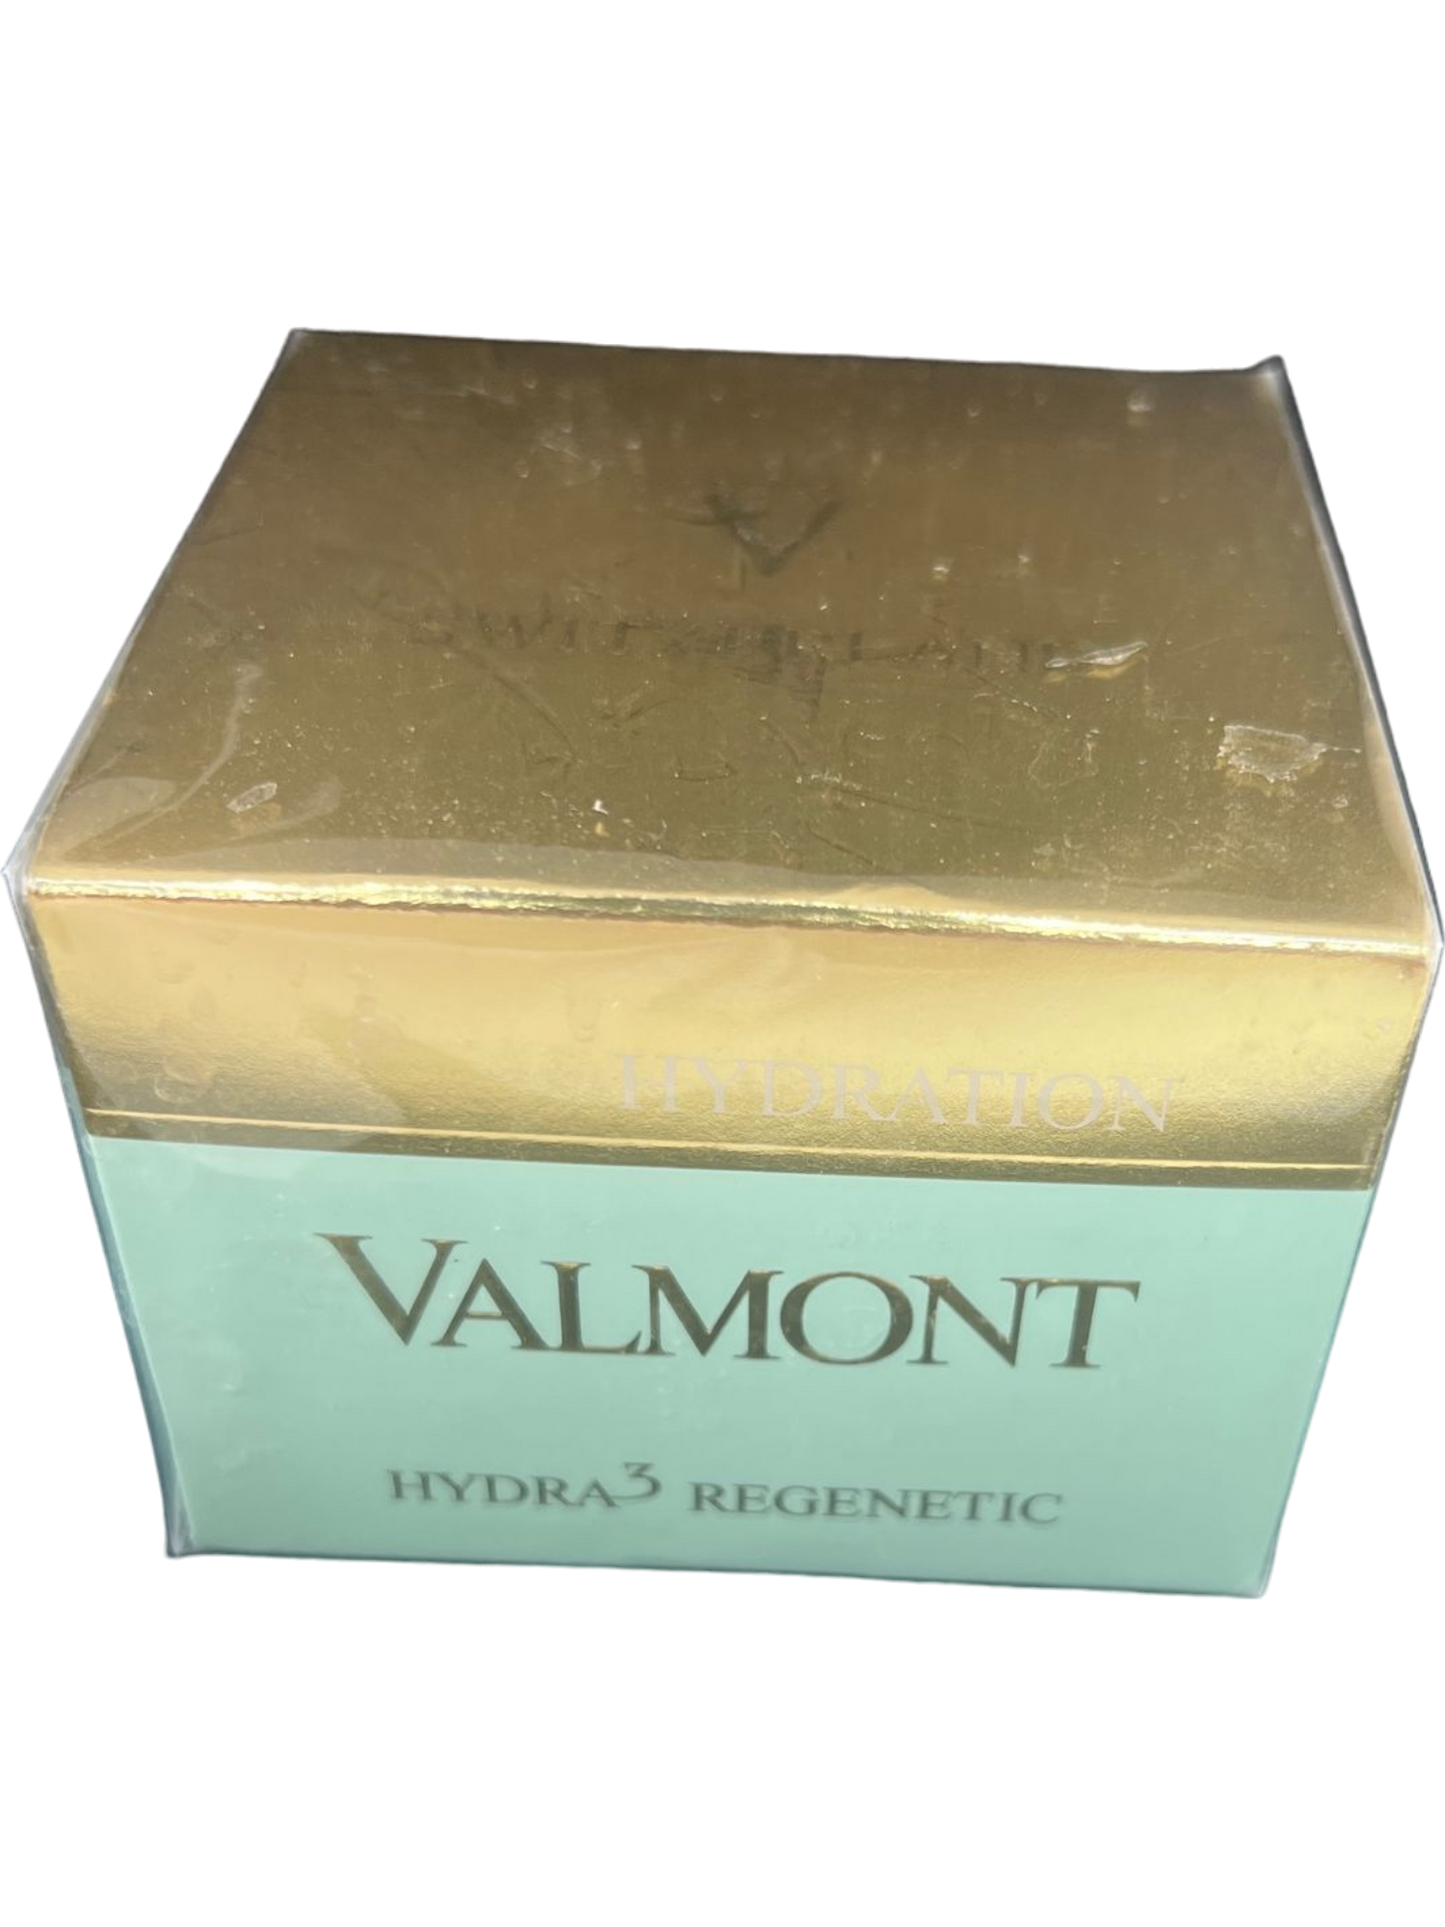 Valmont Black Hydra 3 Regenetic Cream - 50ml